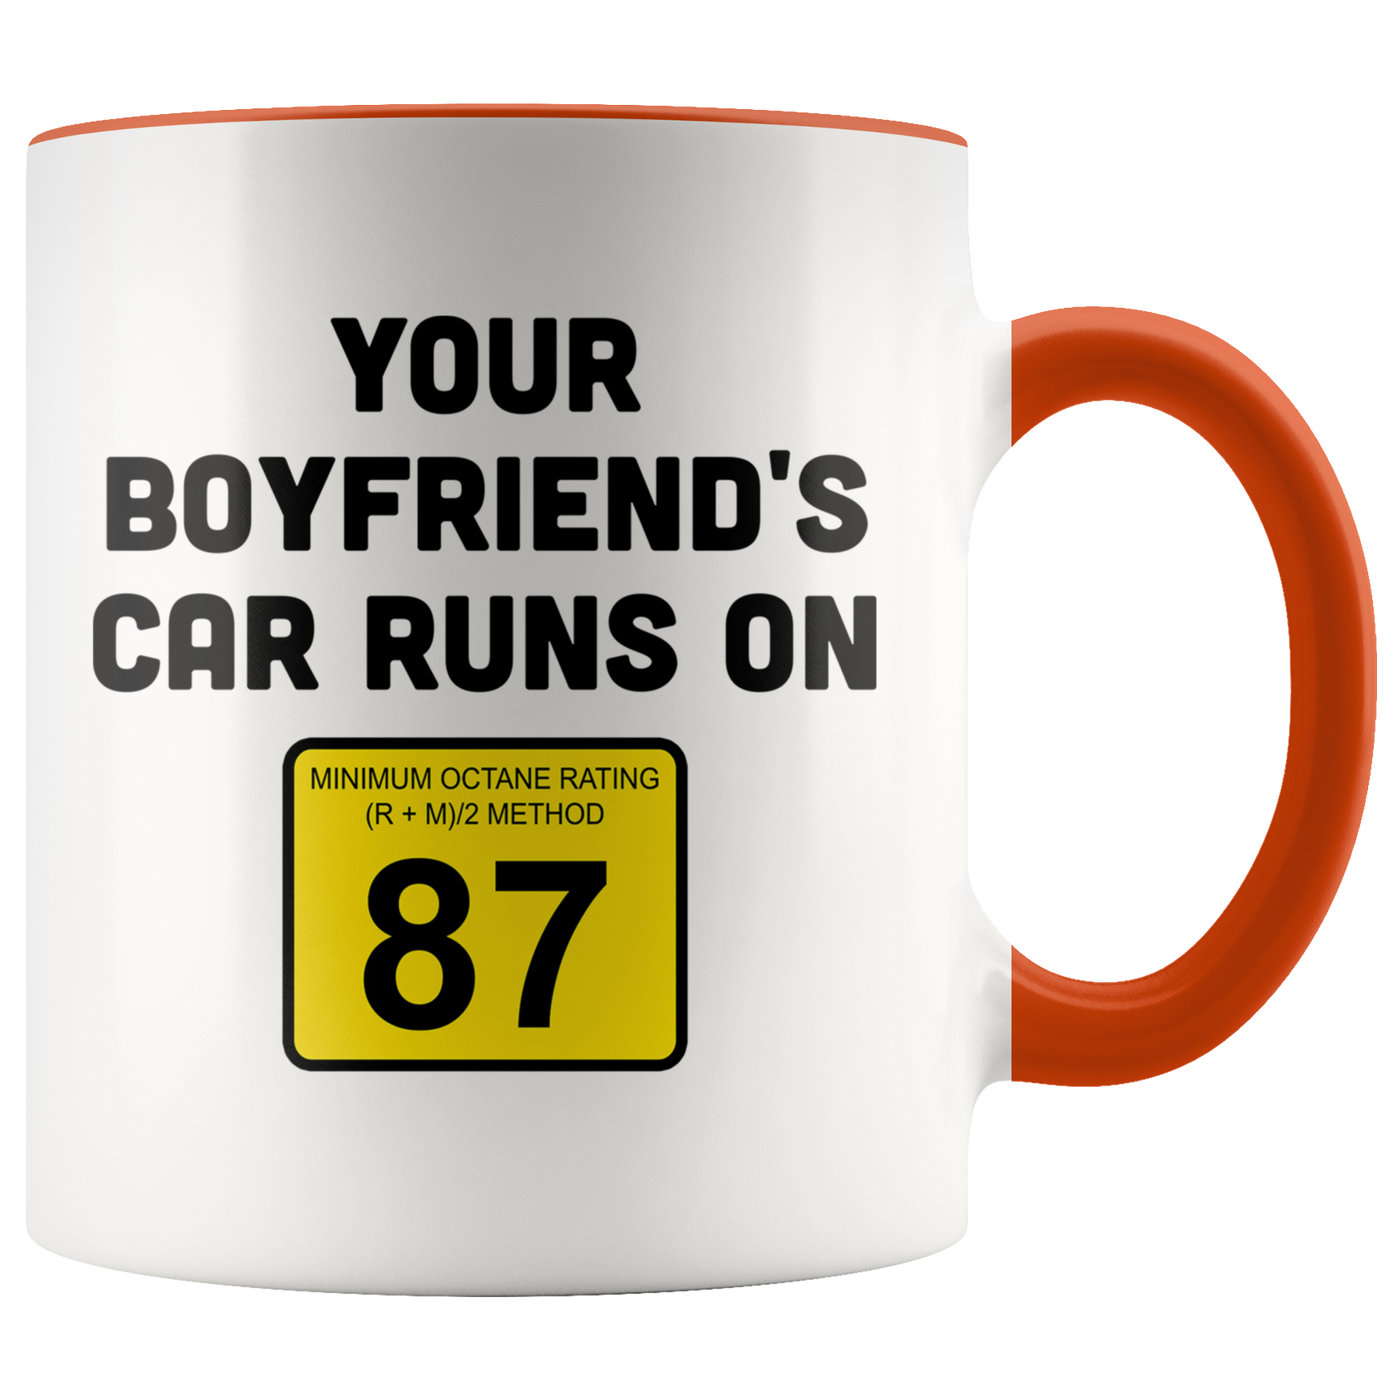 Your Boyrfiend's Car Runs On 87 Mug